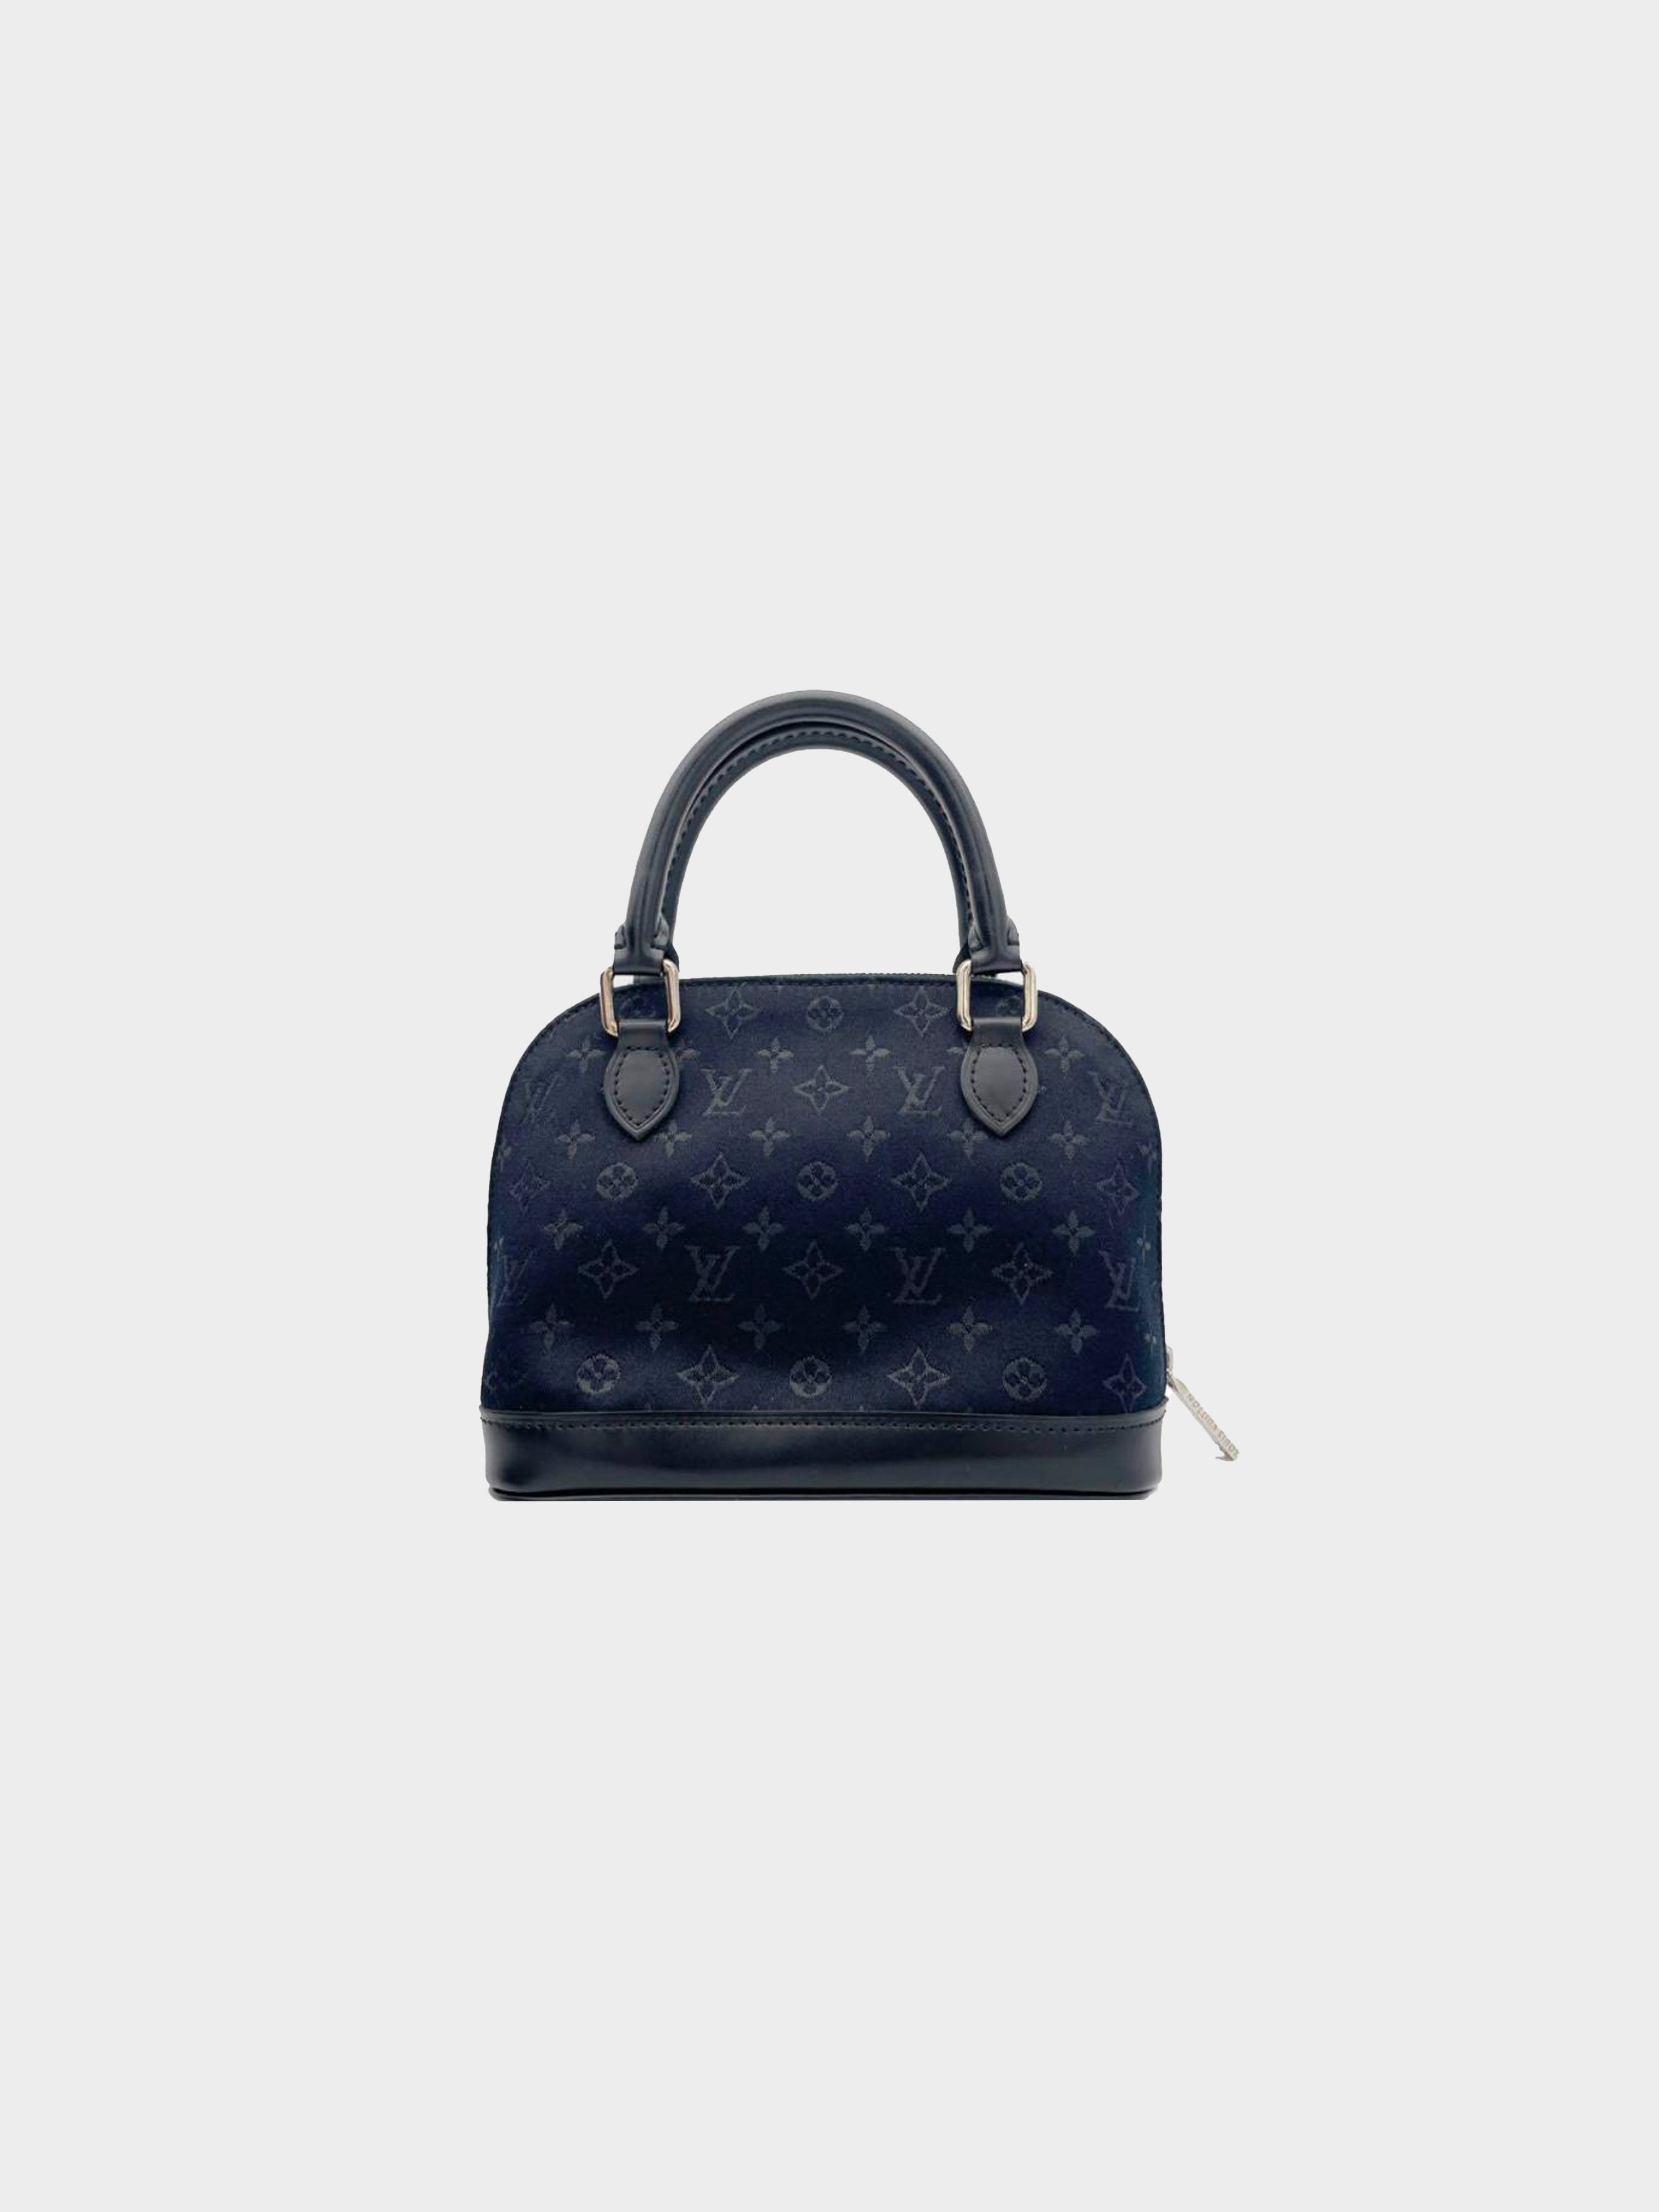 Louis Vuitton Black Monogram Satin Mini Alma Bag. Condition: 1. 6